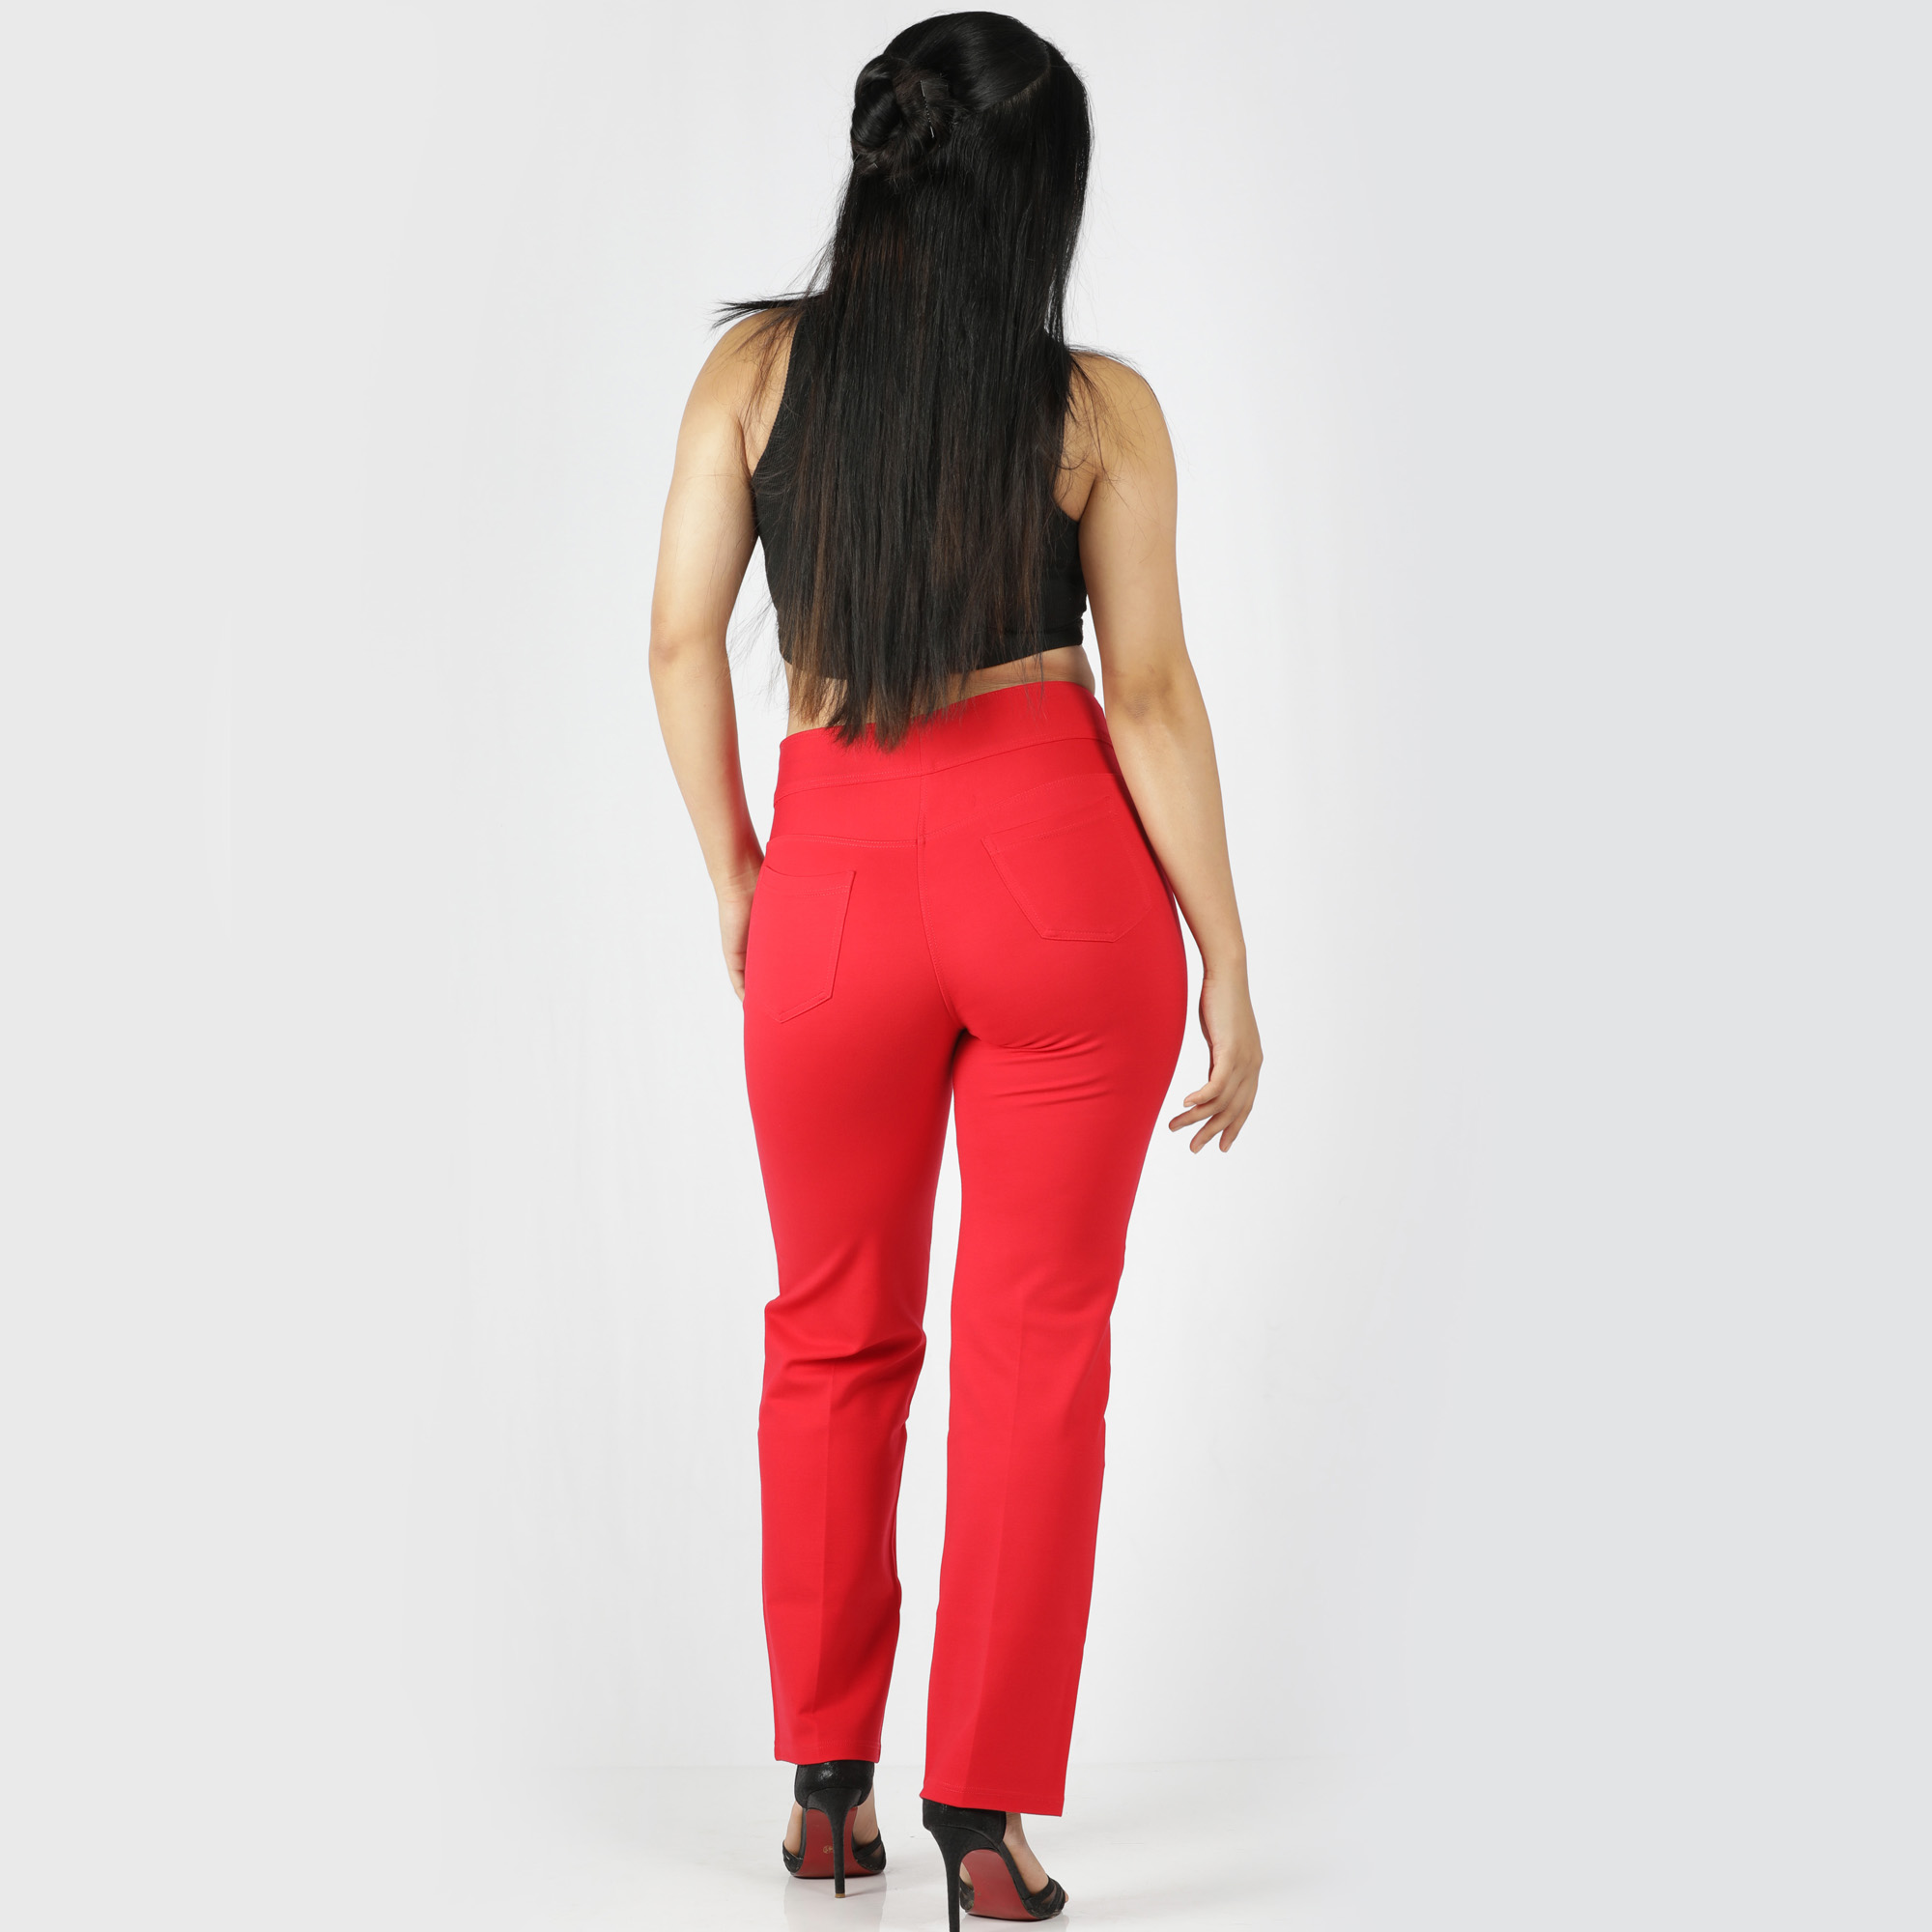 Red pants for women - Tummy tucker straight leg - 2 back pockets - Belore  Slims